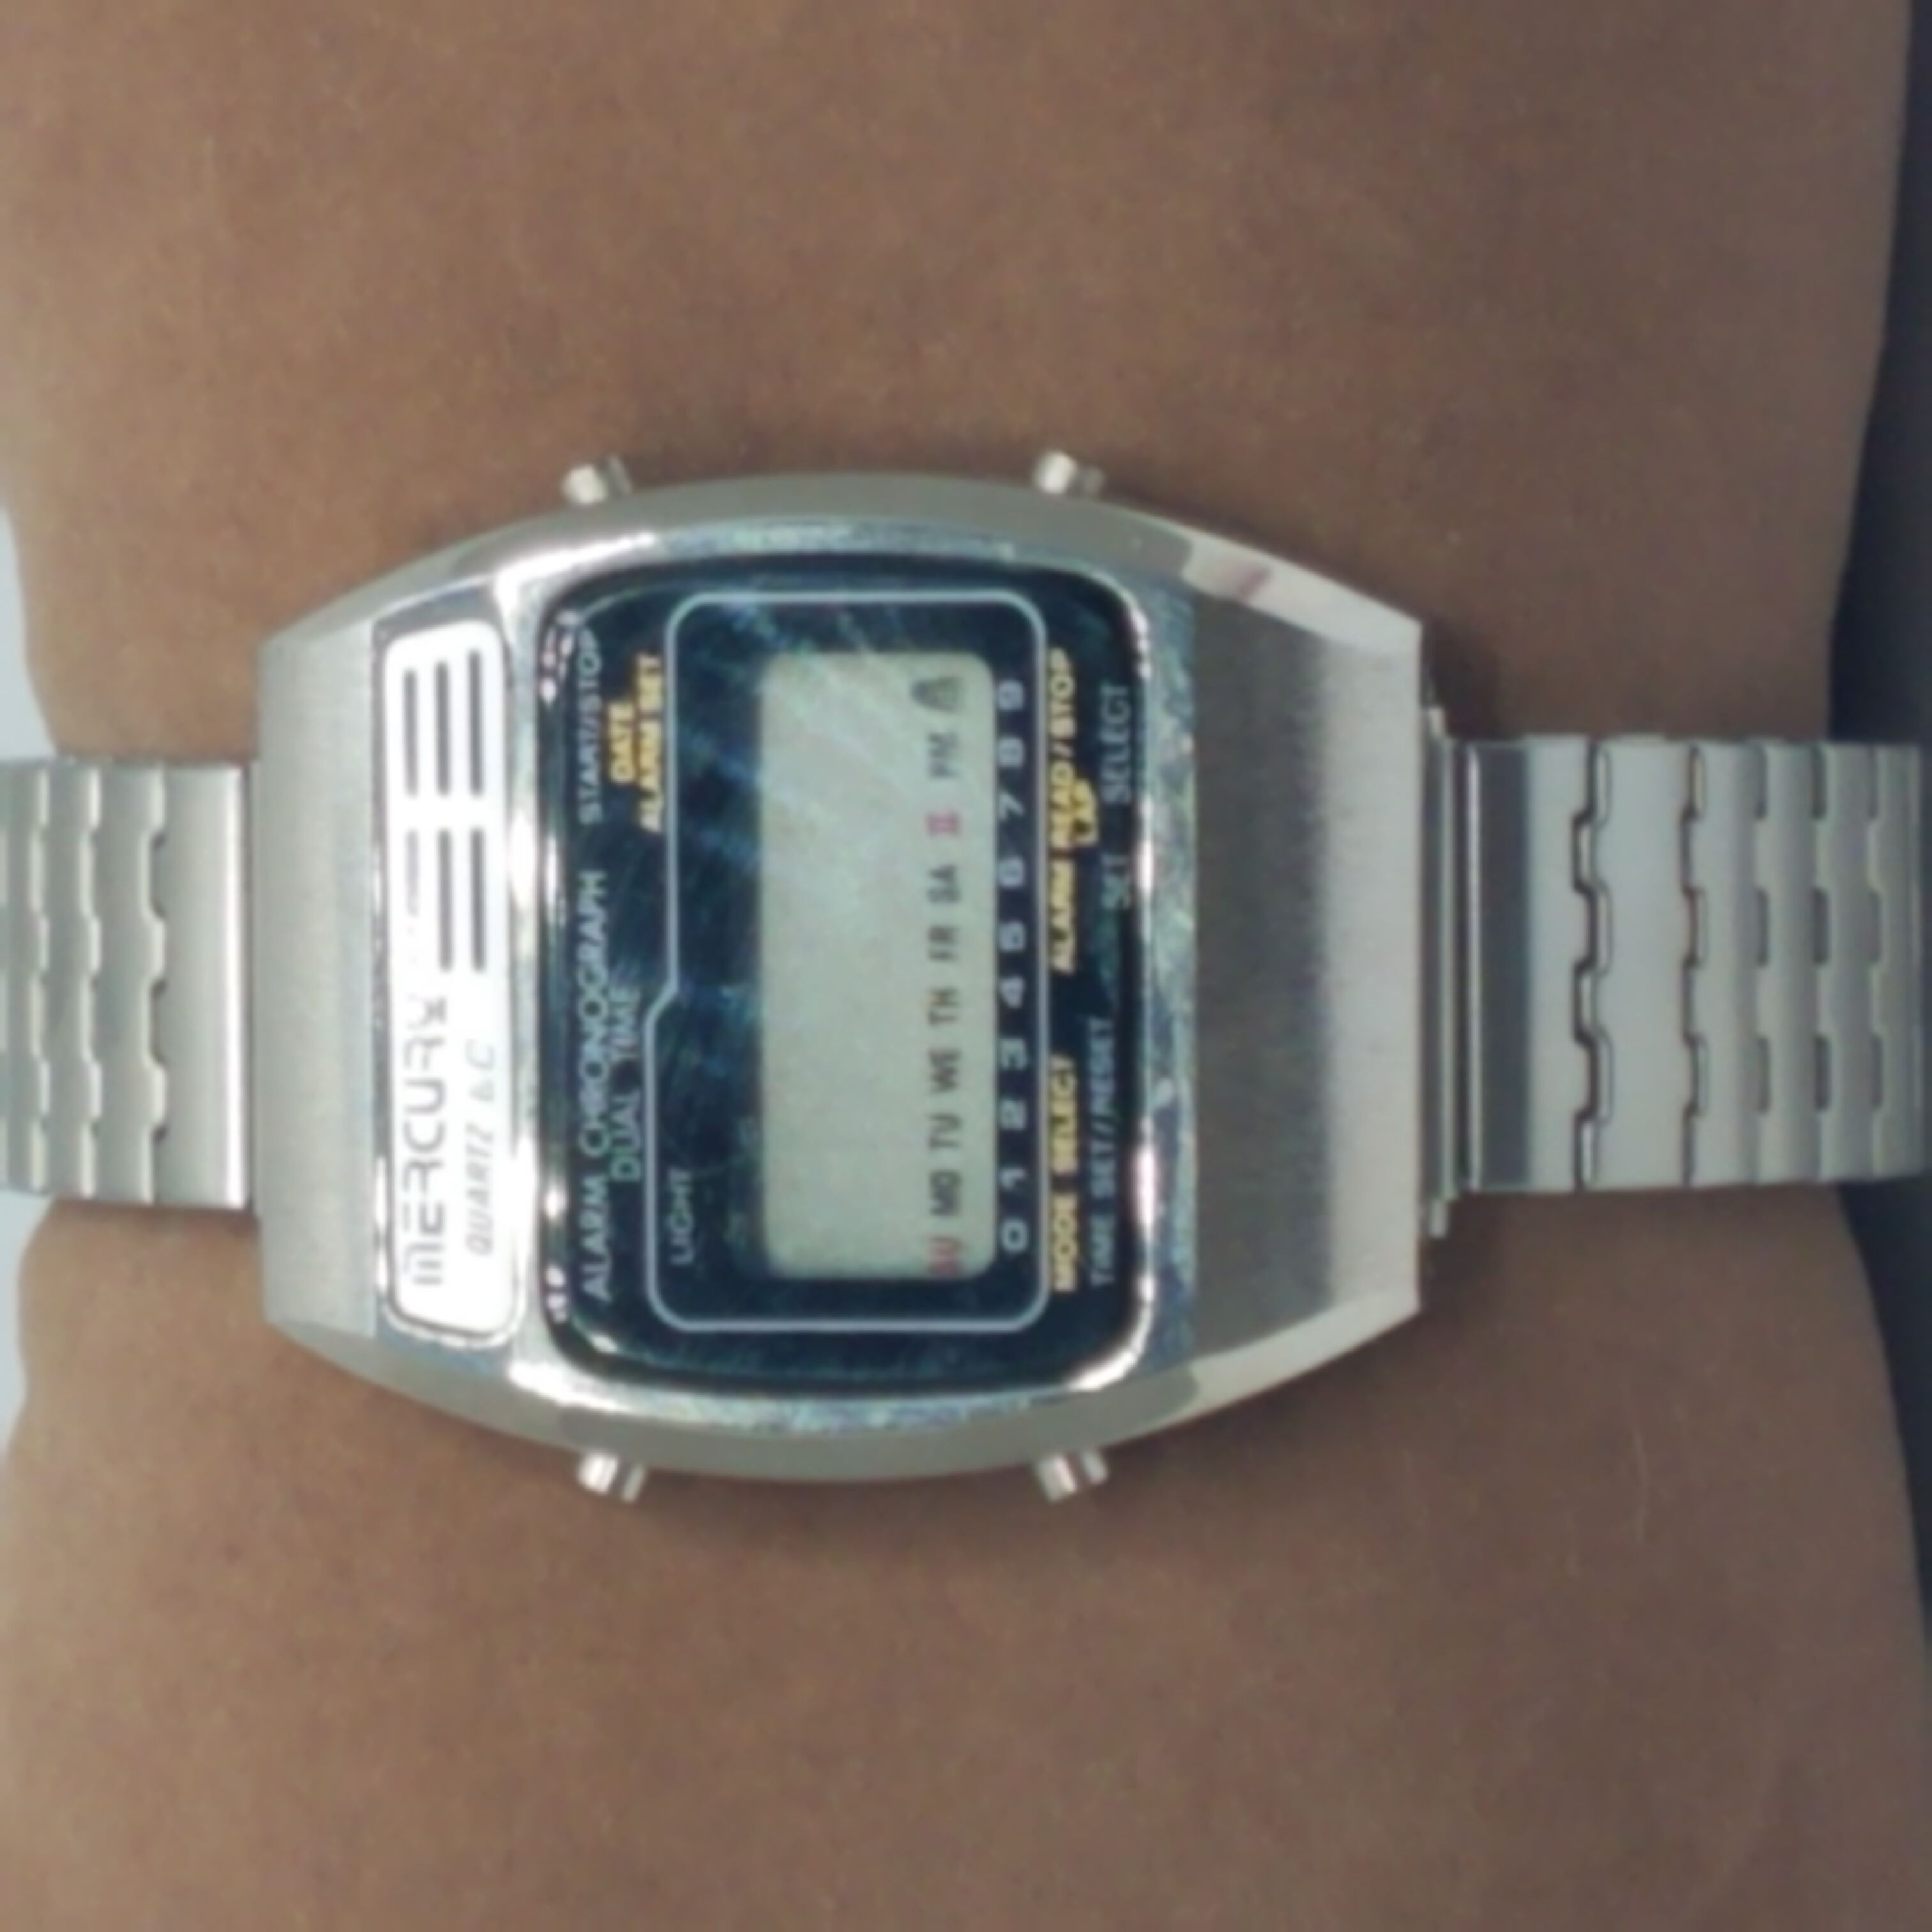 4 Renata 373 Button Cell watch 0%Hg Mercury Free Batteries - Walmart.com